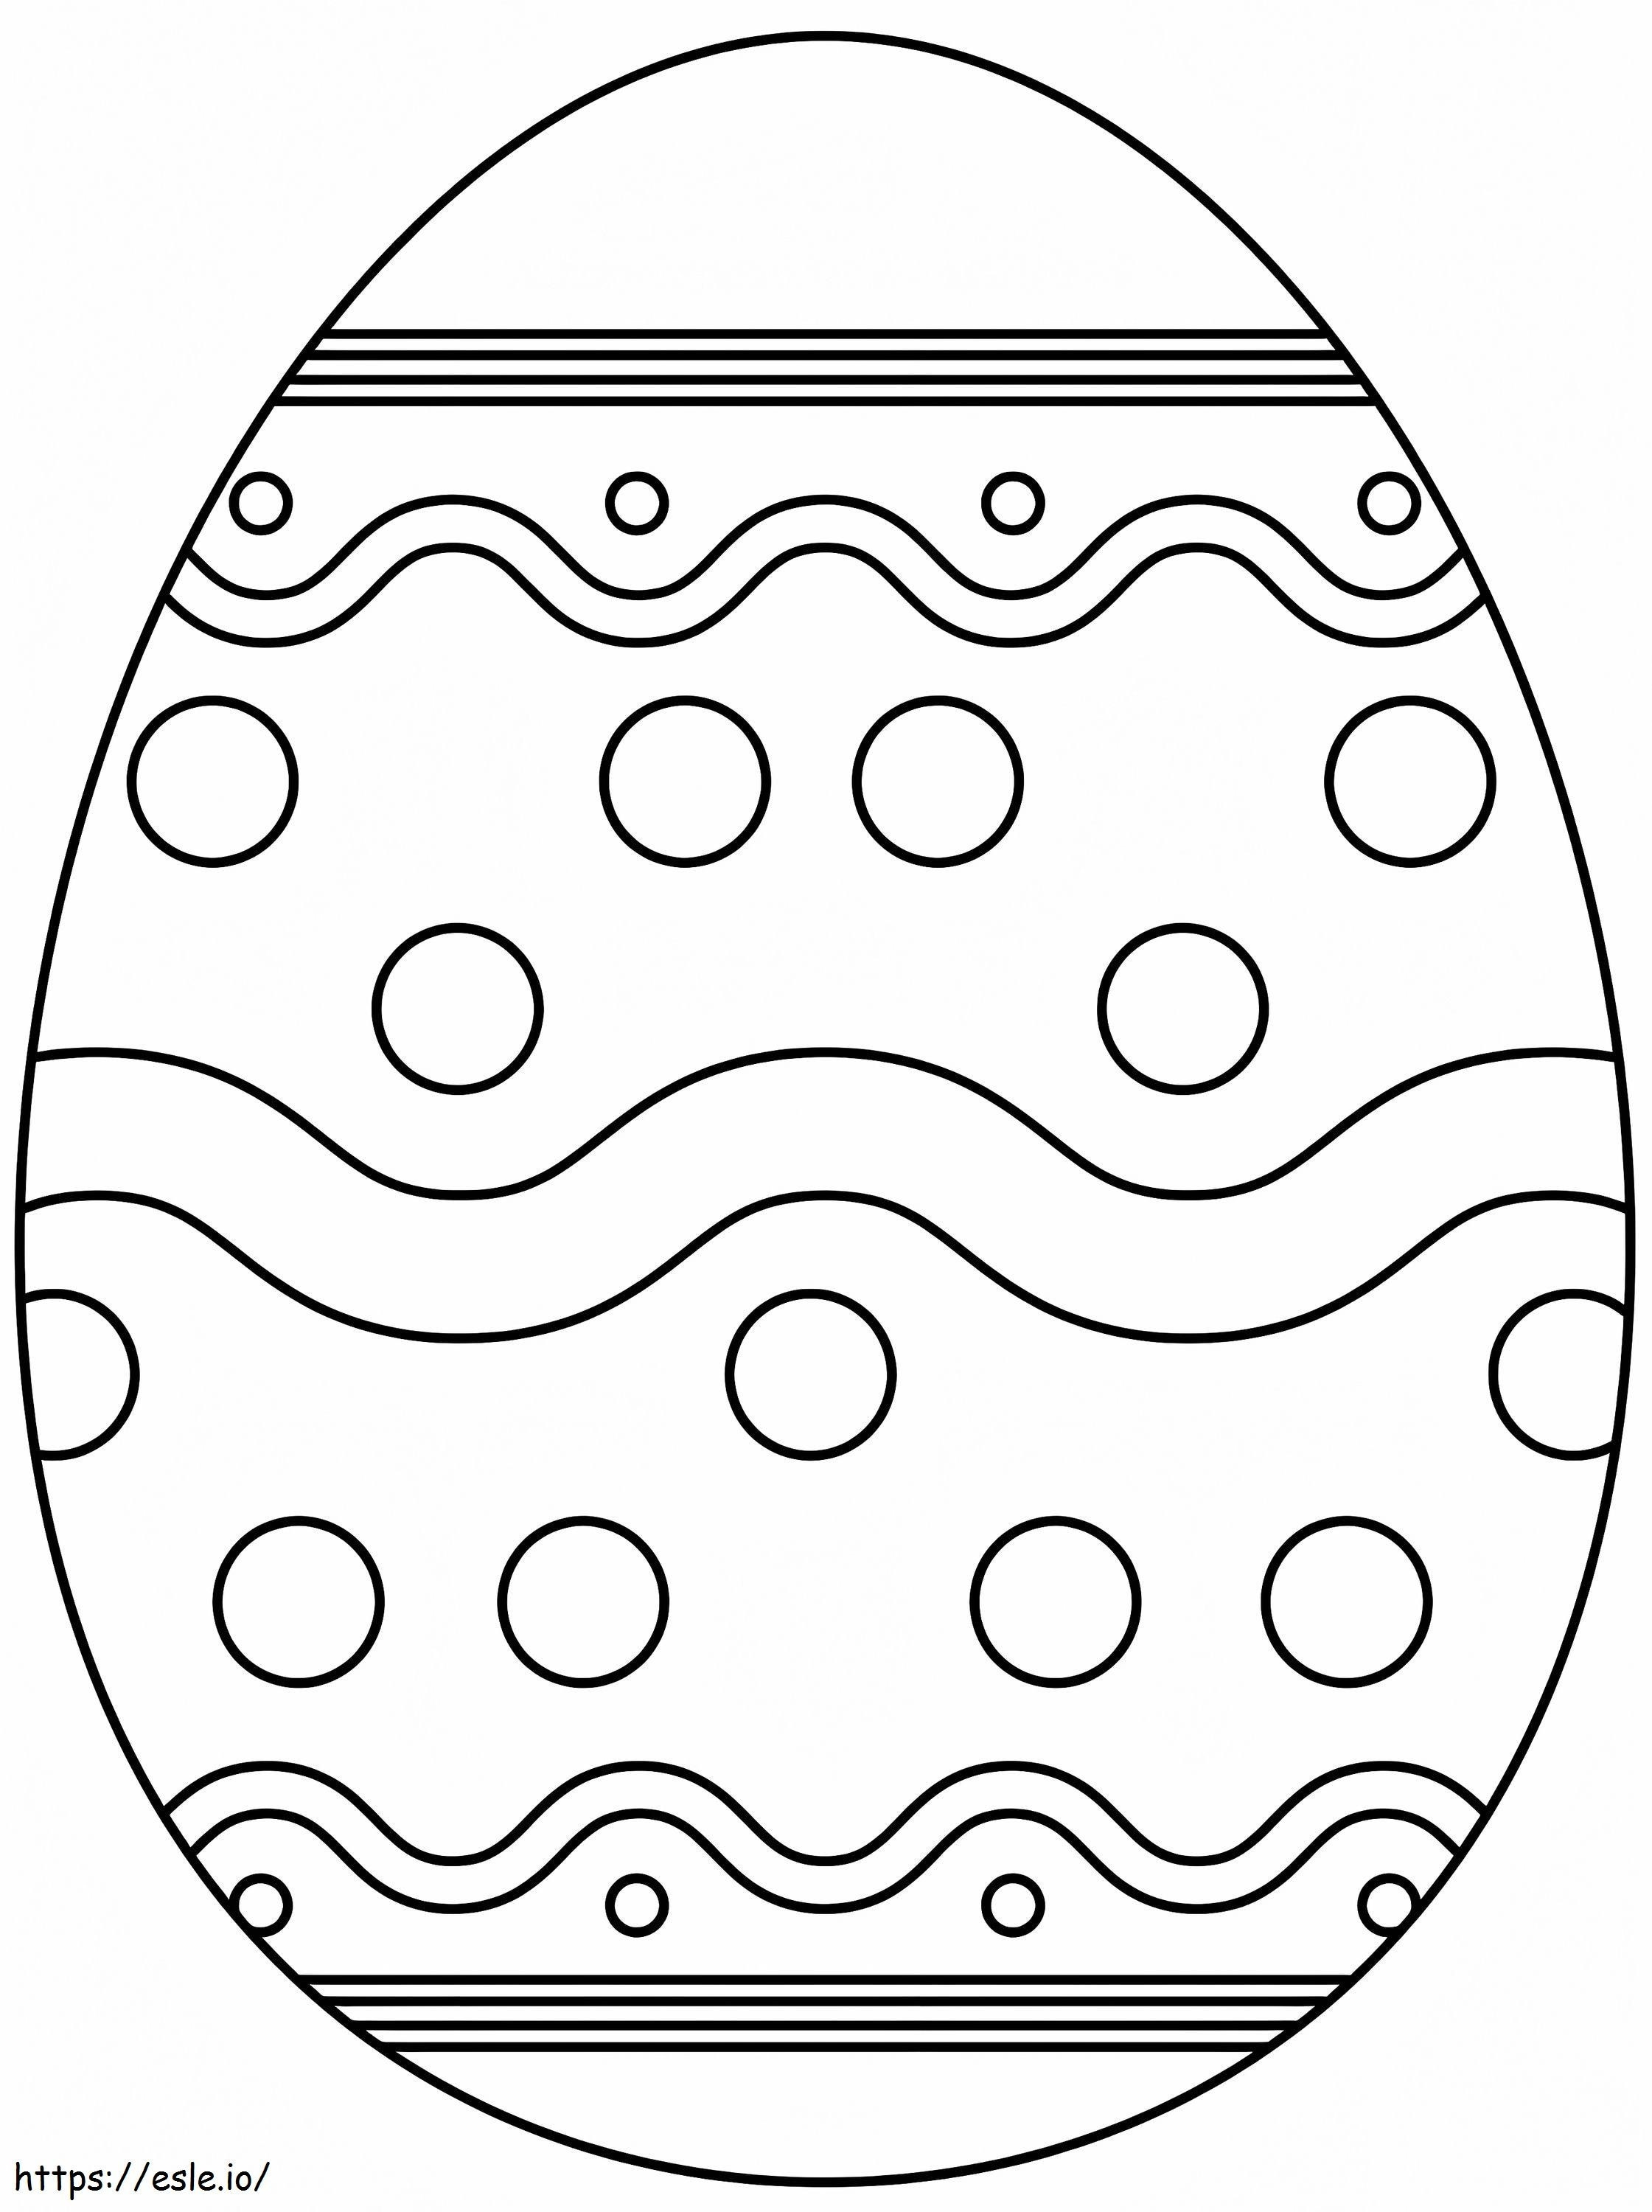 Telur Paskah yang Lucu 5 Gambar Mewarnai